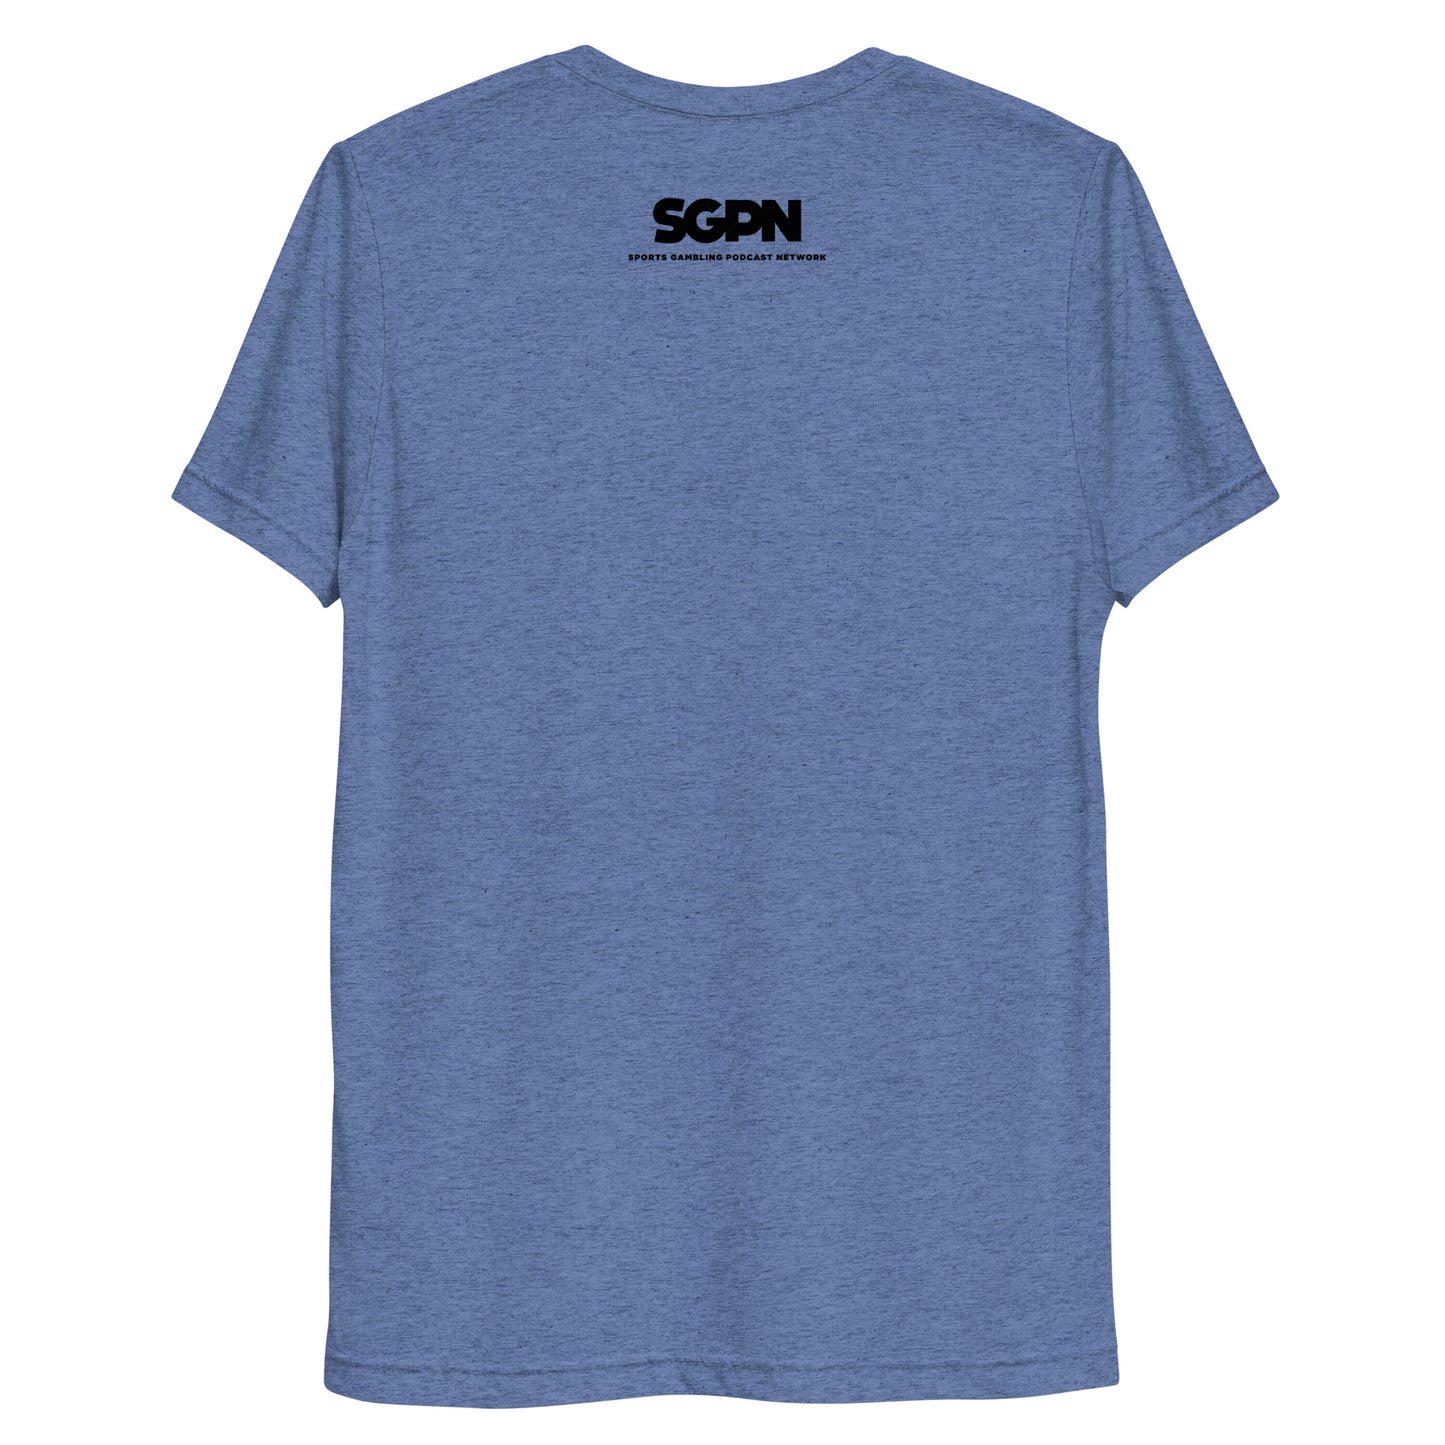 Bottom Line Bombs - Short sleeve t-shirt (Color Logo)